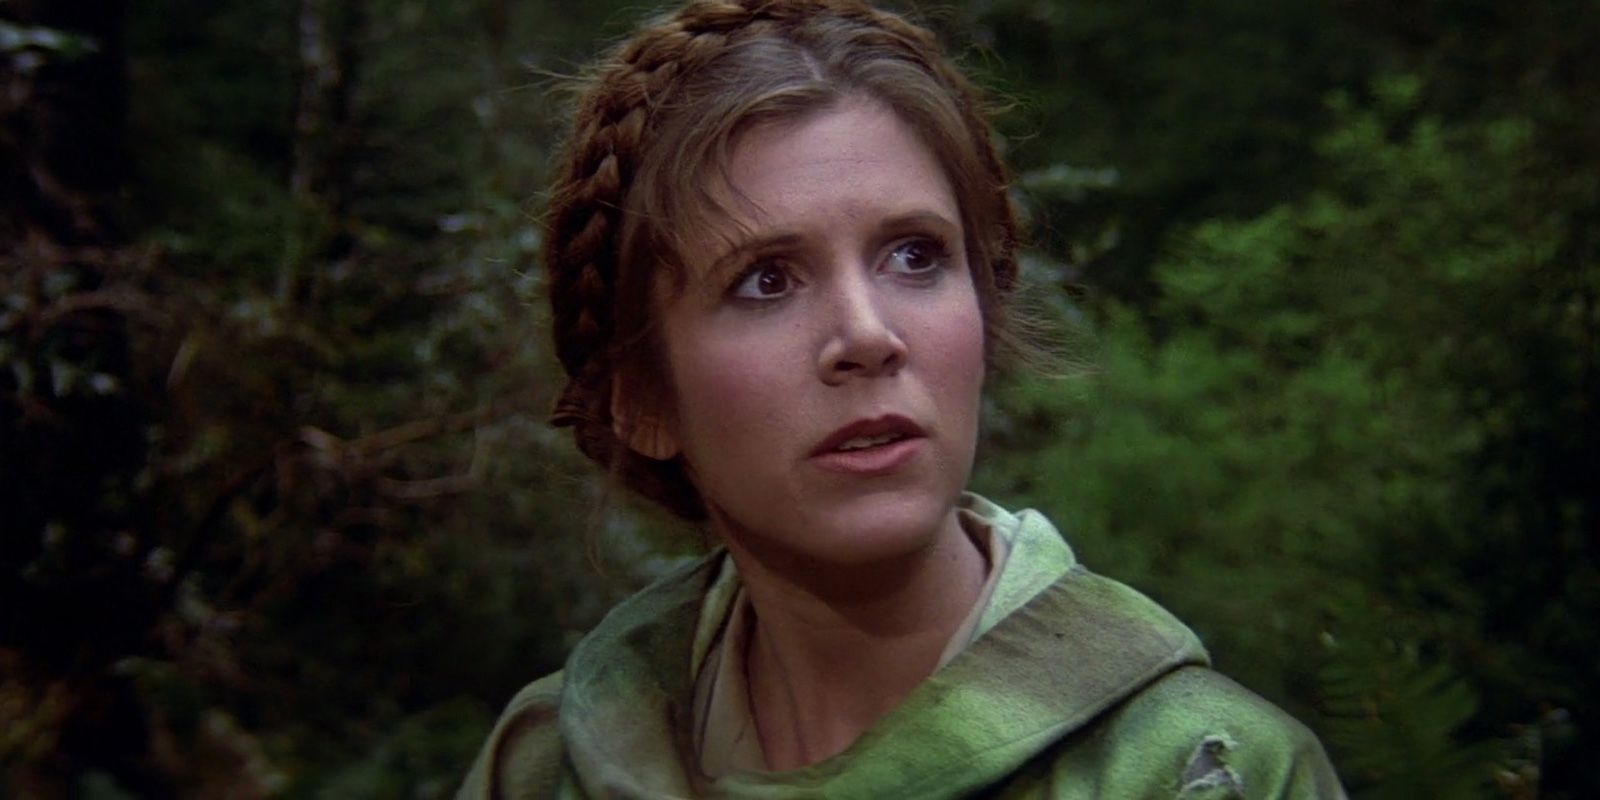 Princess Leia on Endor in Return of the Jedi